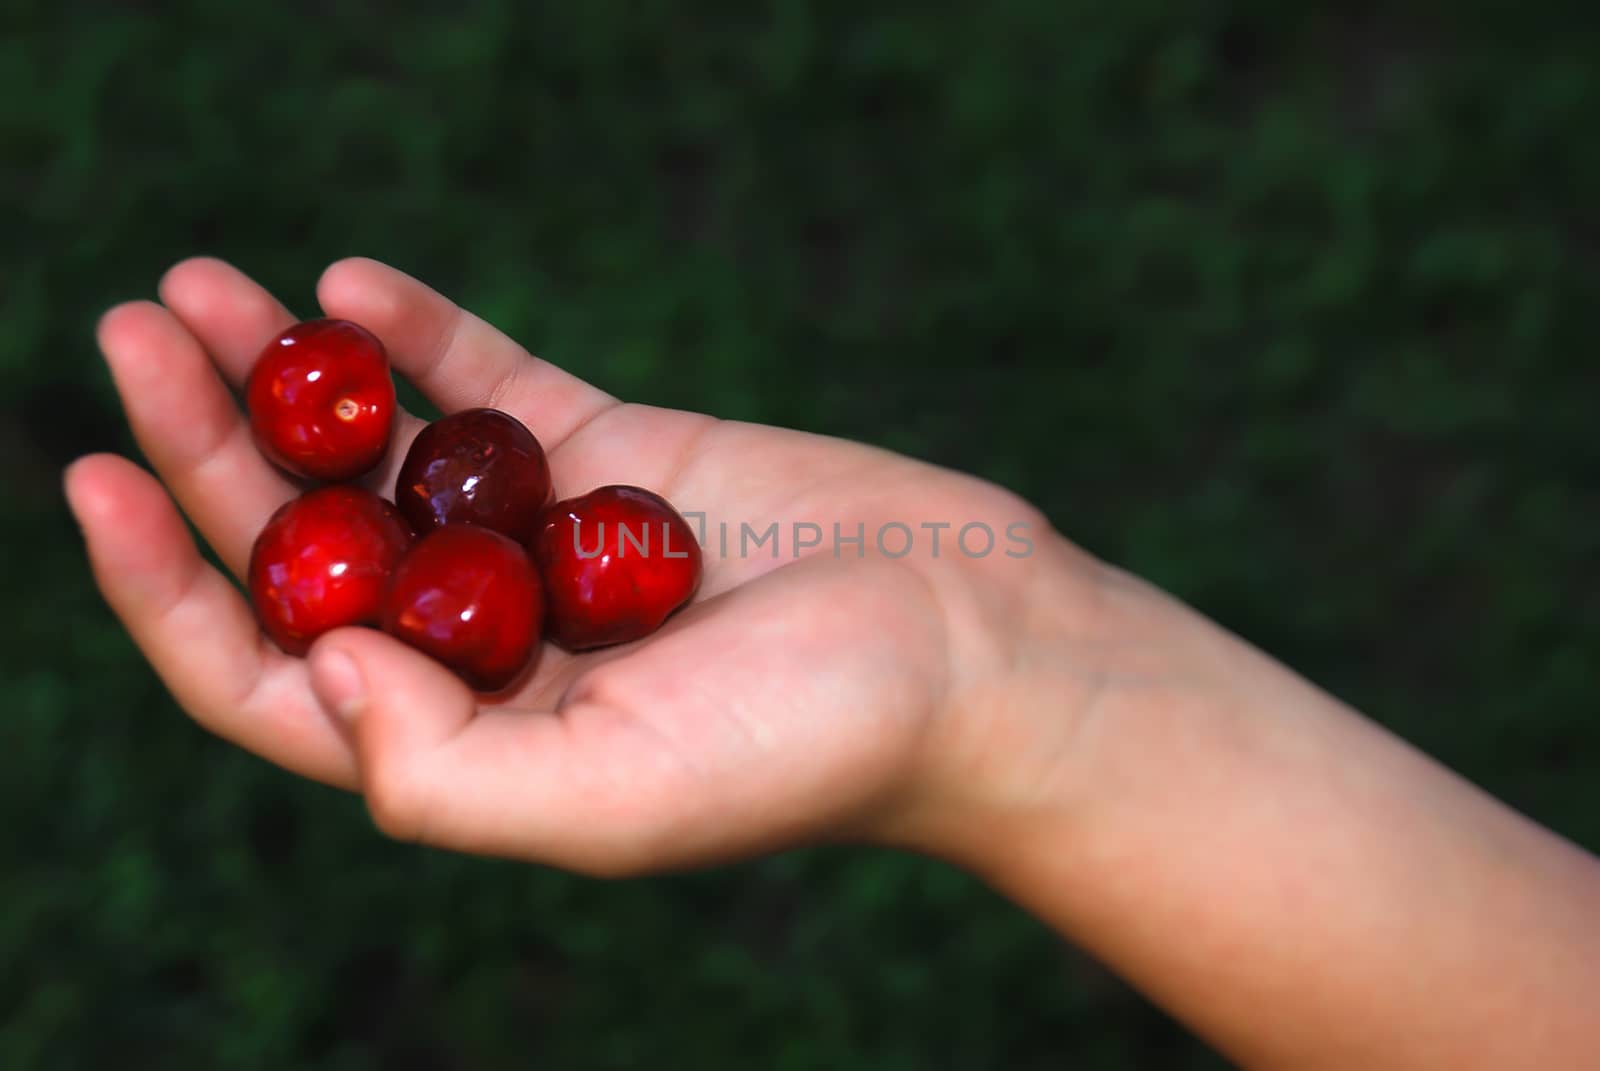 Five cherries in a hand against dark green blurry background